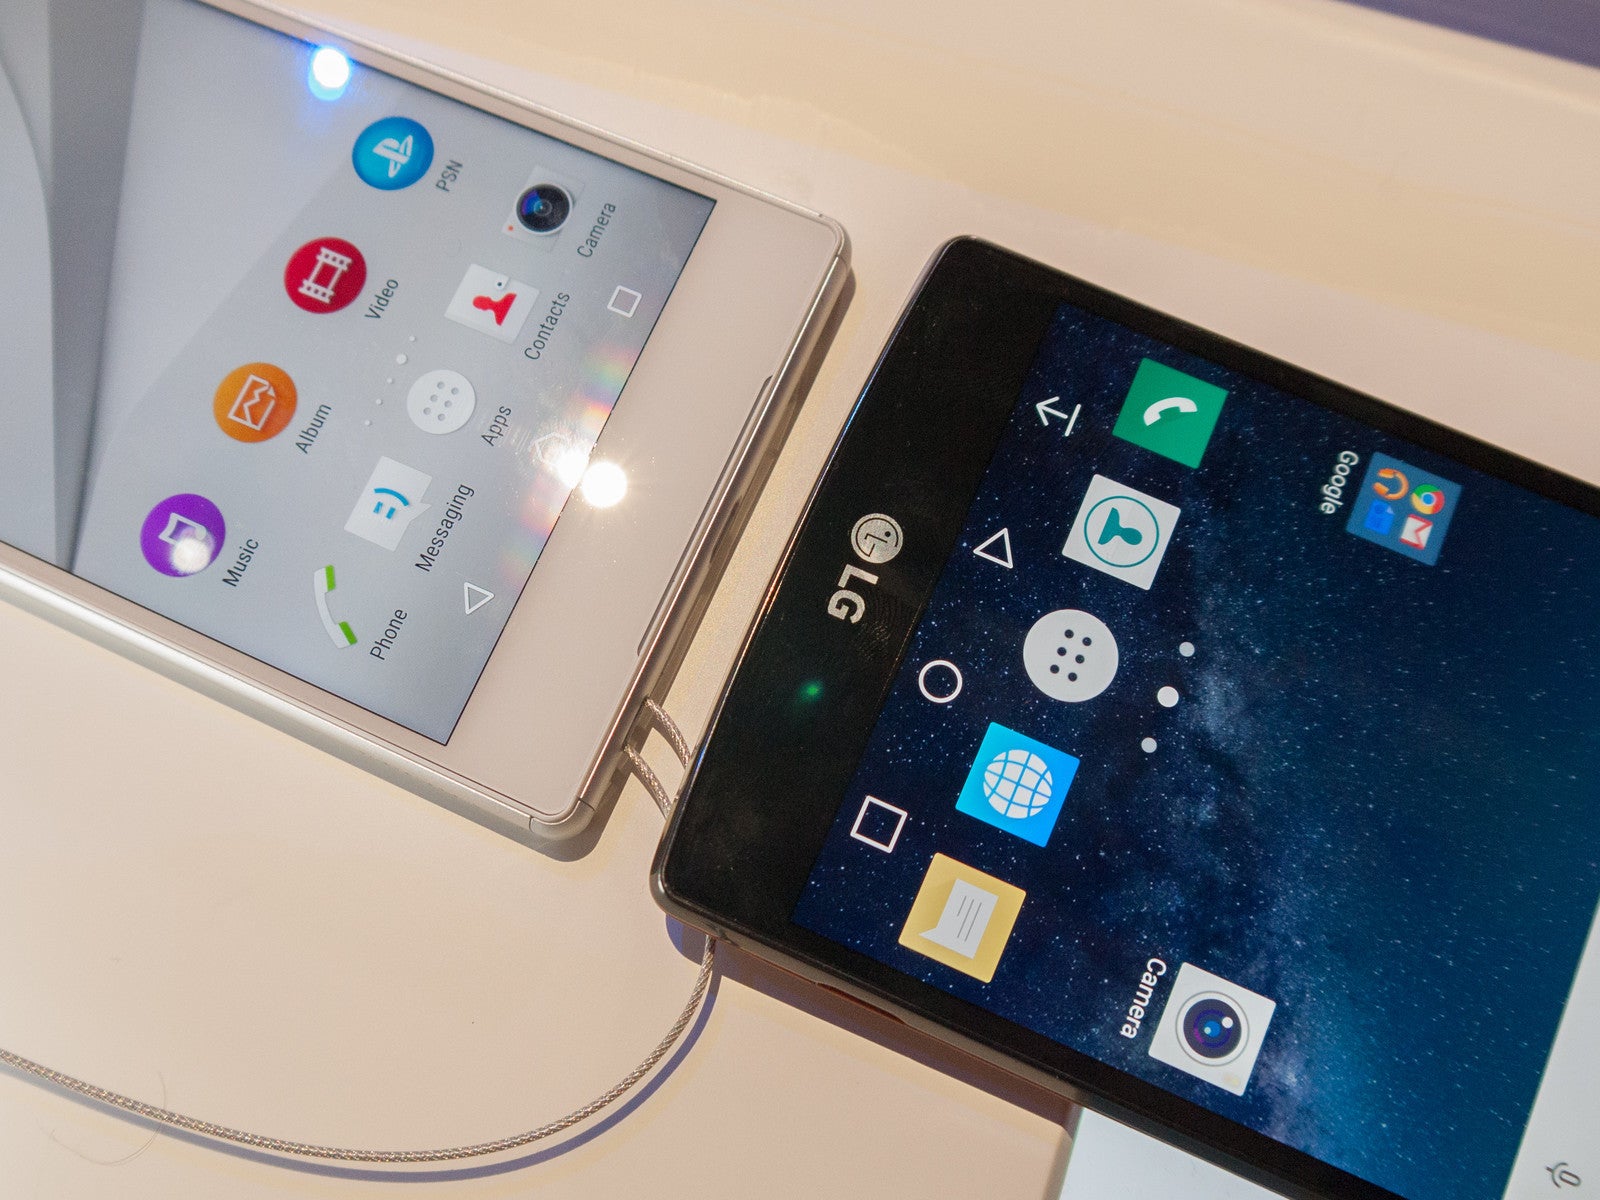 Sony Xperia Z5 vs LG G4: first look